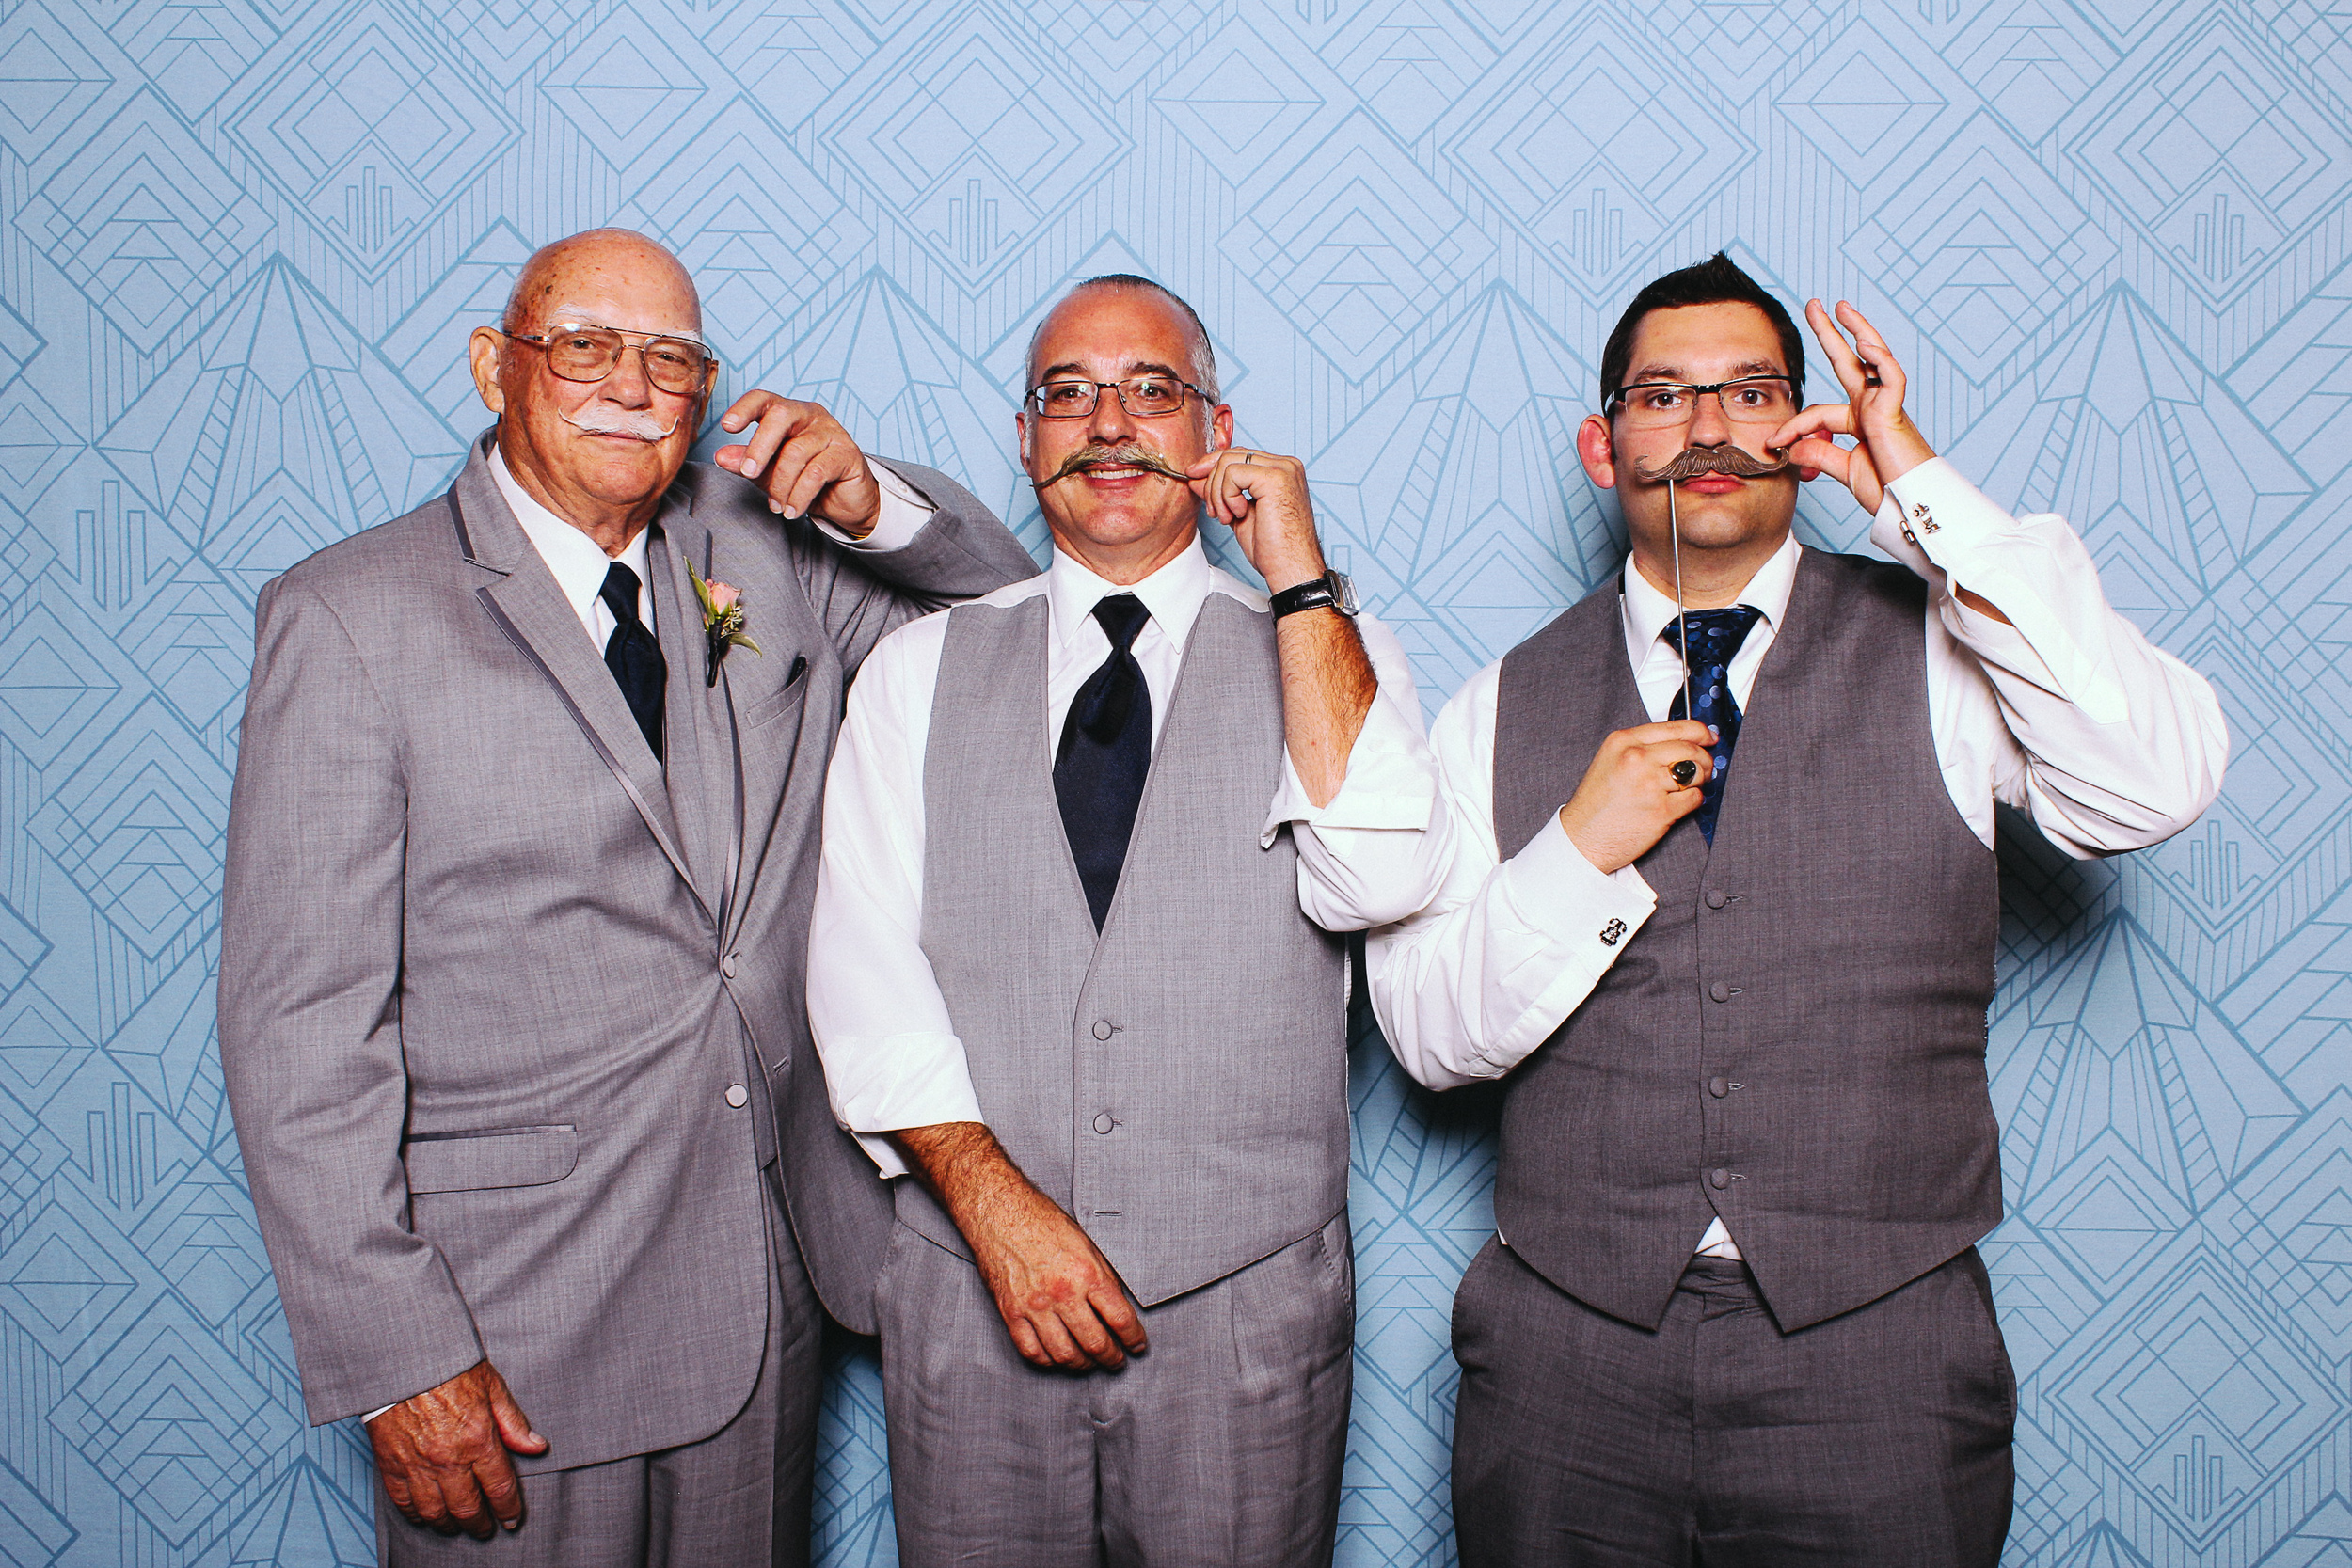 00090-Cleveland Wedding Photobooth Rental-20140831.jpg